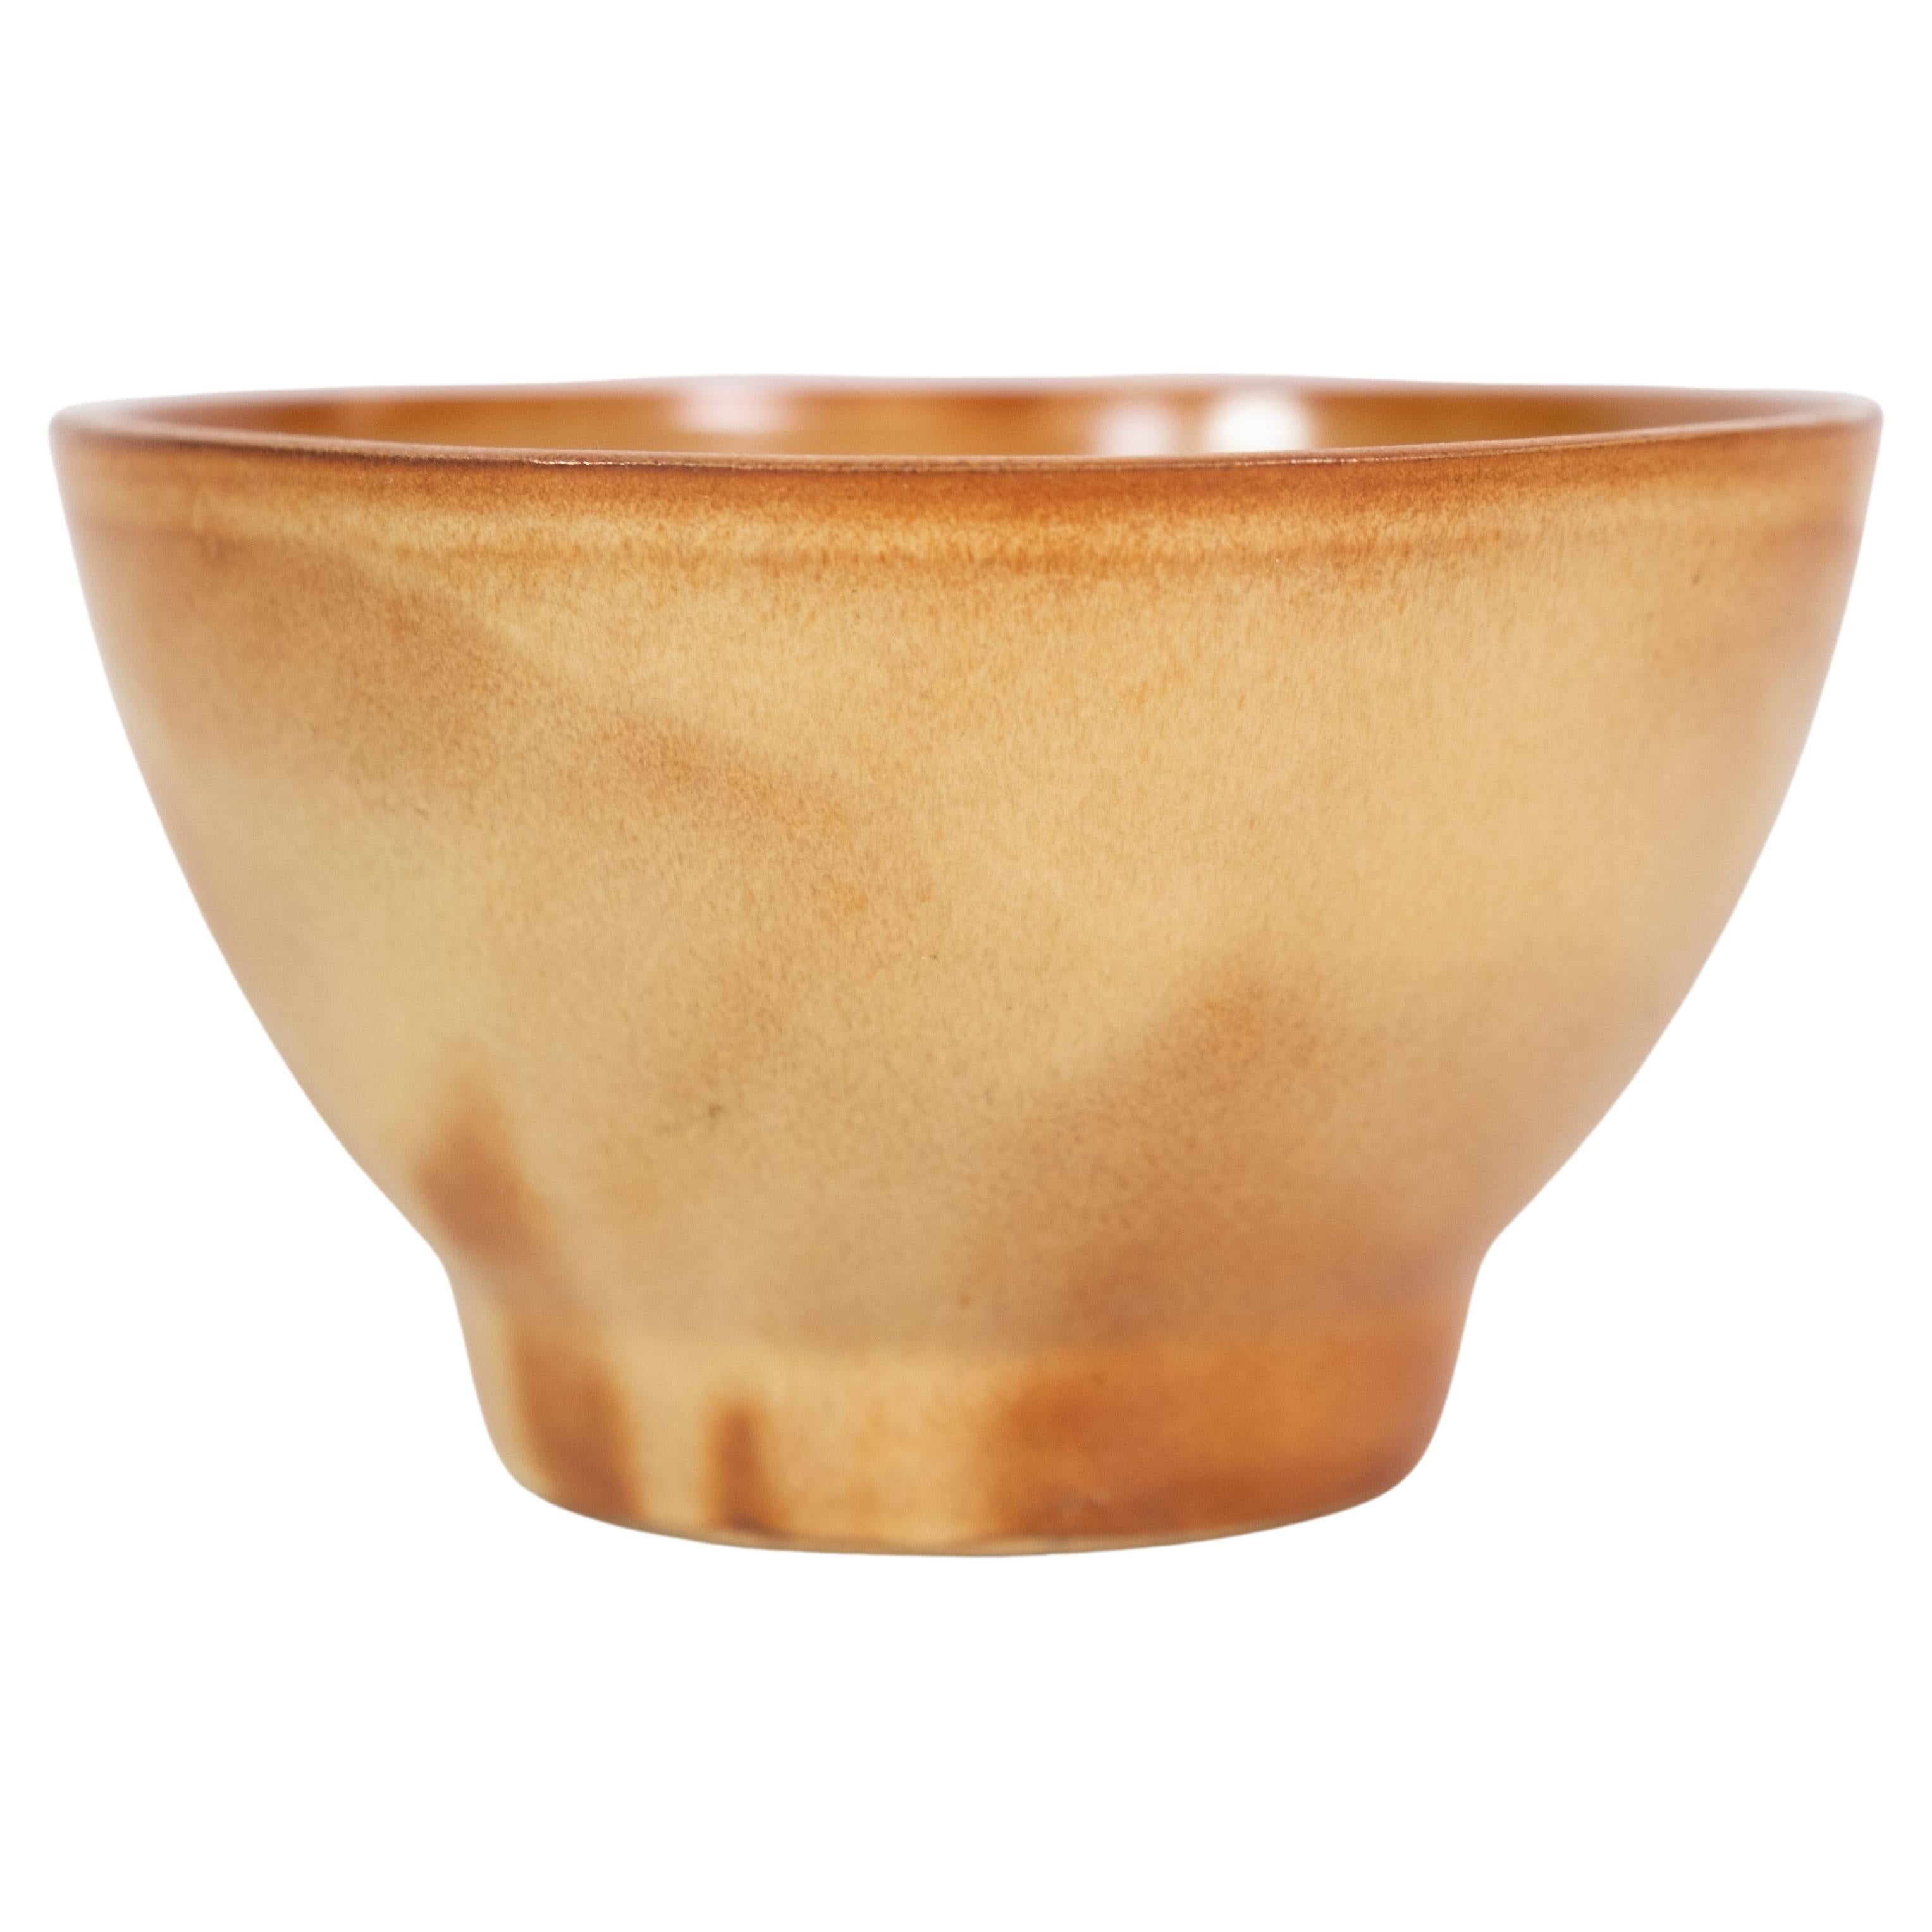 Ceramic Bowl, Orange / Yellow, 1960s For Sale